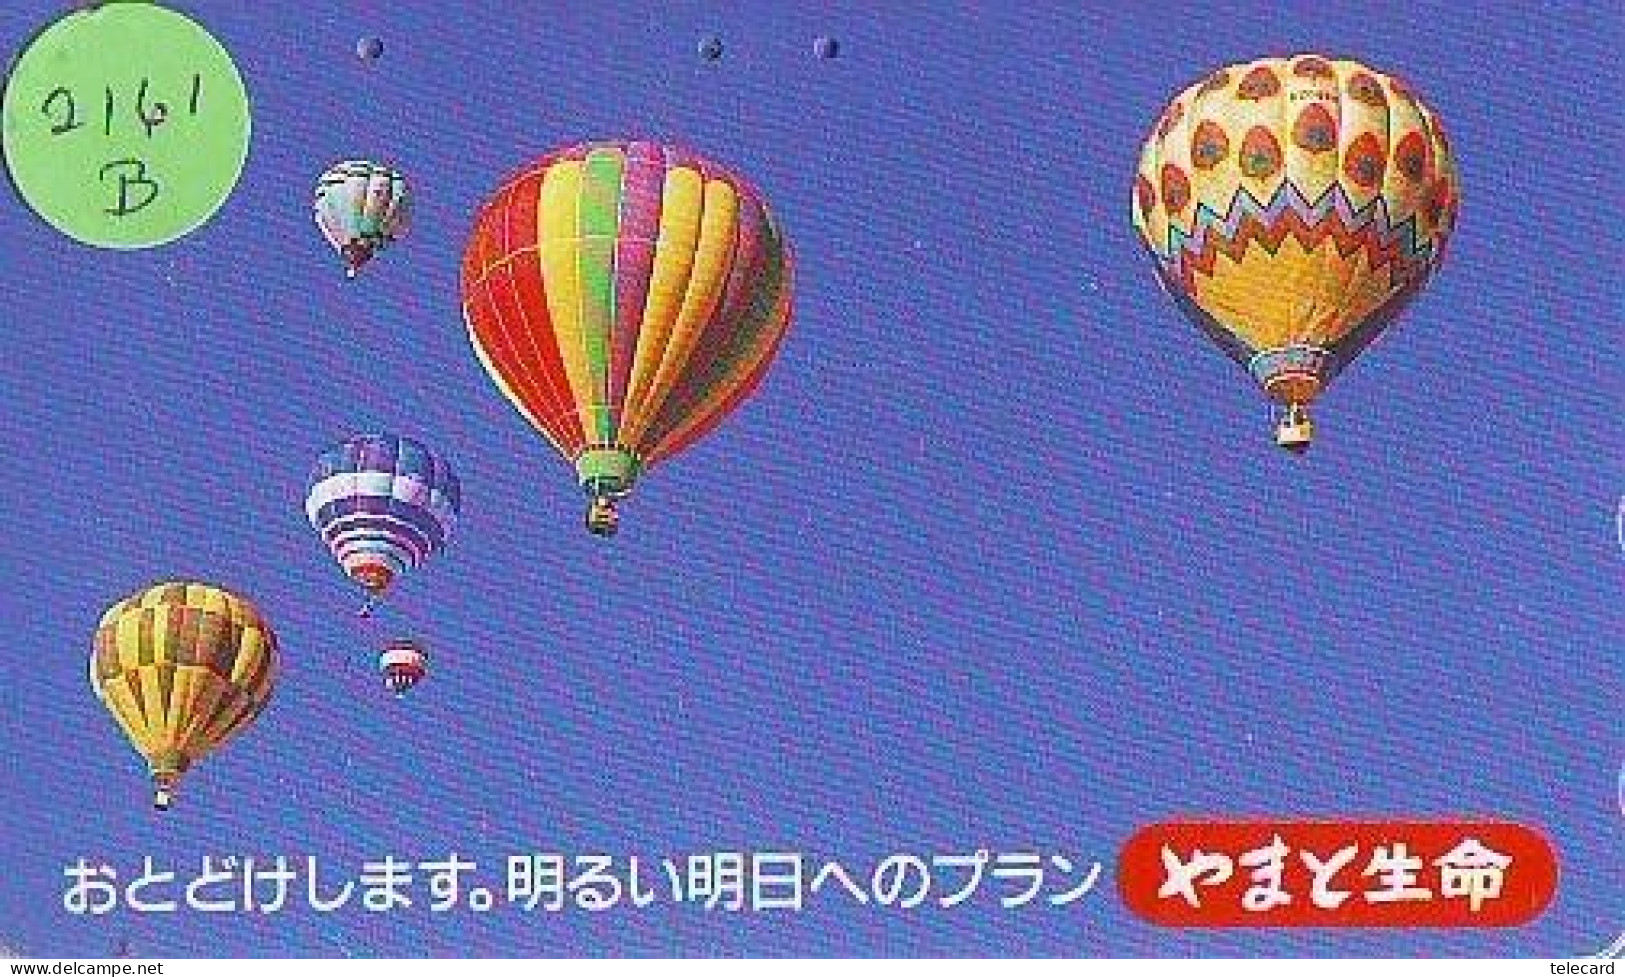 Telecarte JAPON * (2161b) BALLON * MONTGOLFIERE - Hot Air Balloon * Aerostato * Heißluft PHONECARD JAPAN - - Sport